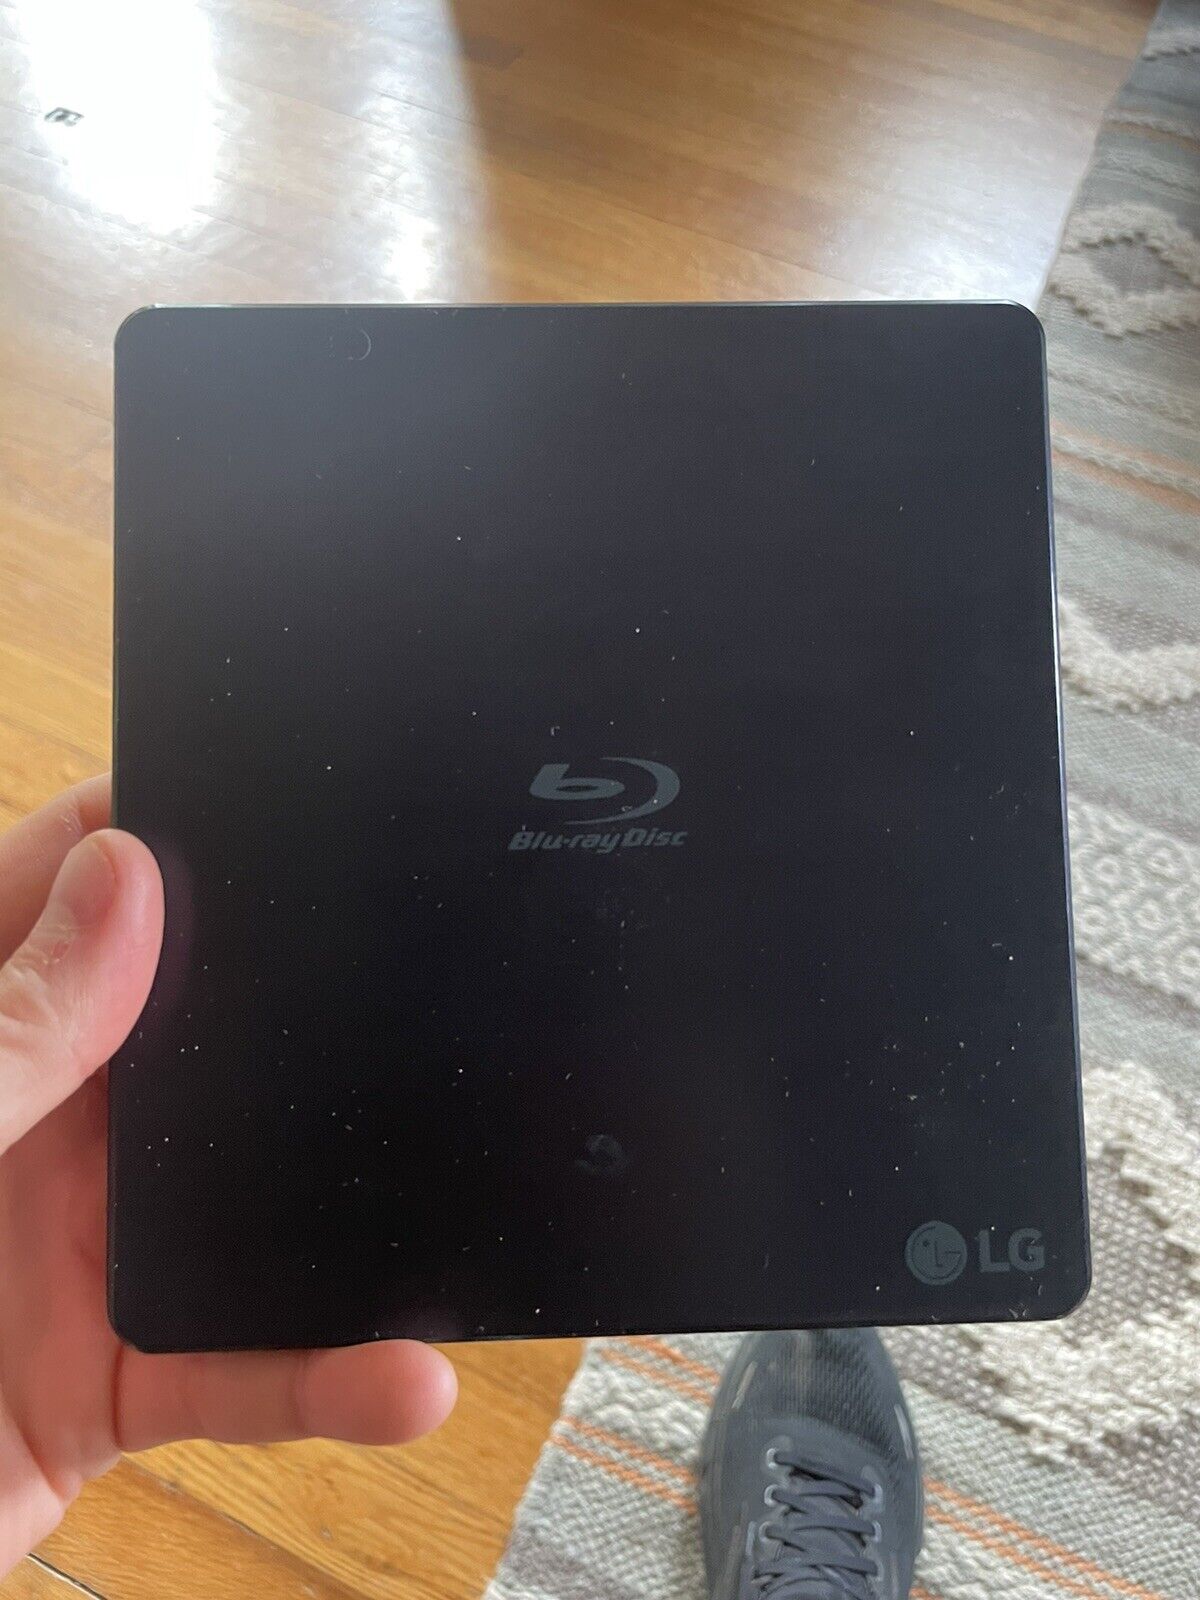 LG BP50NB40 USB 2.0 Slim Portable Blu-ray/ DVD Writer - Black